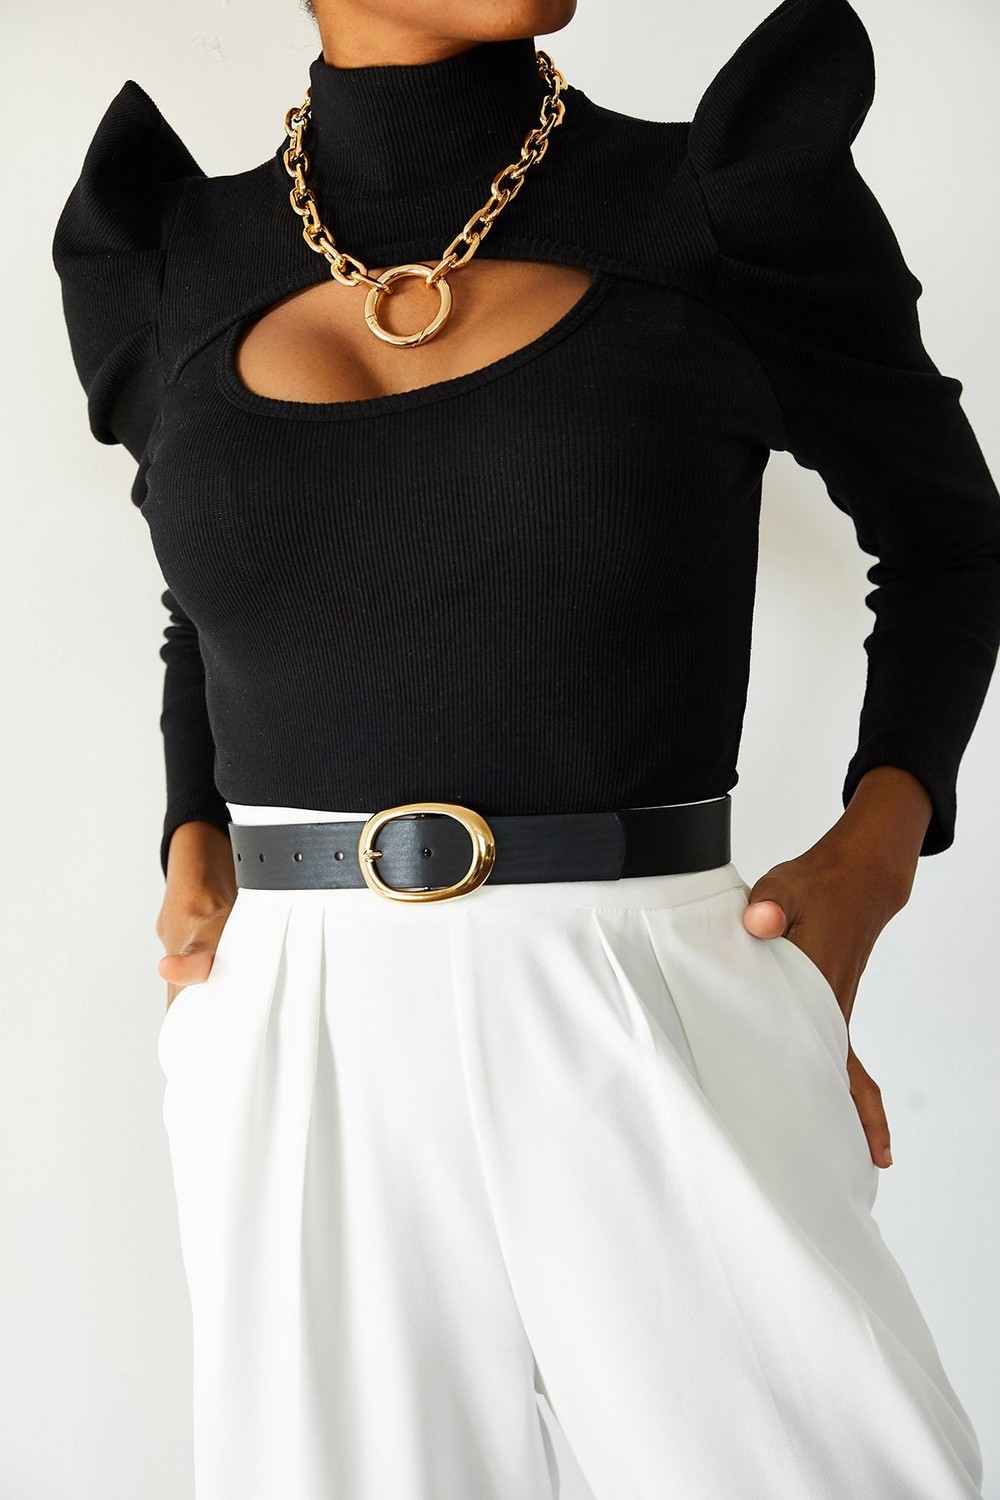 XHAN Women's Black Plunger Detail Standing Shoulder Blouse